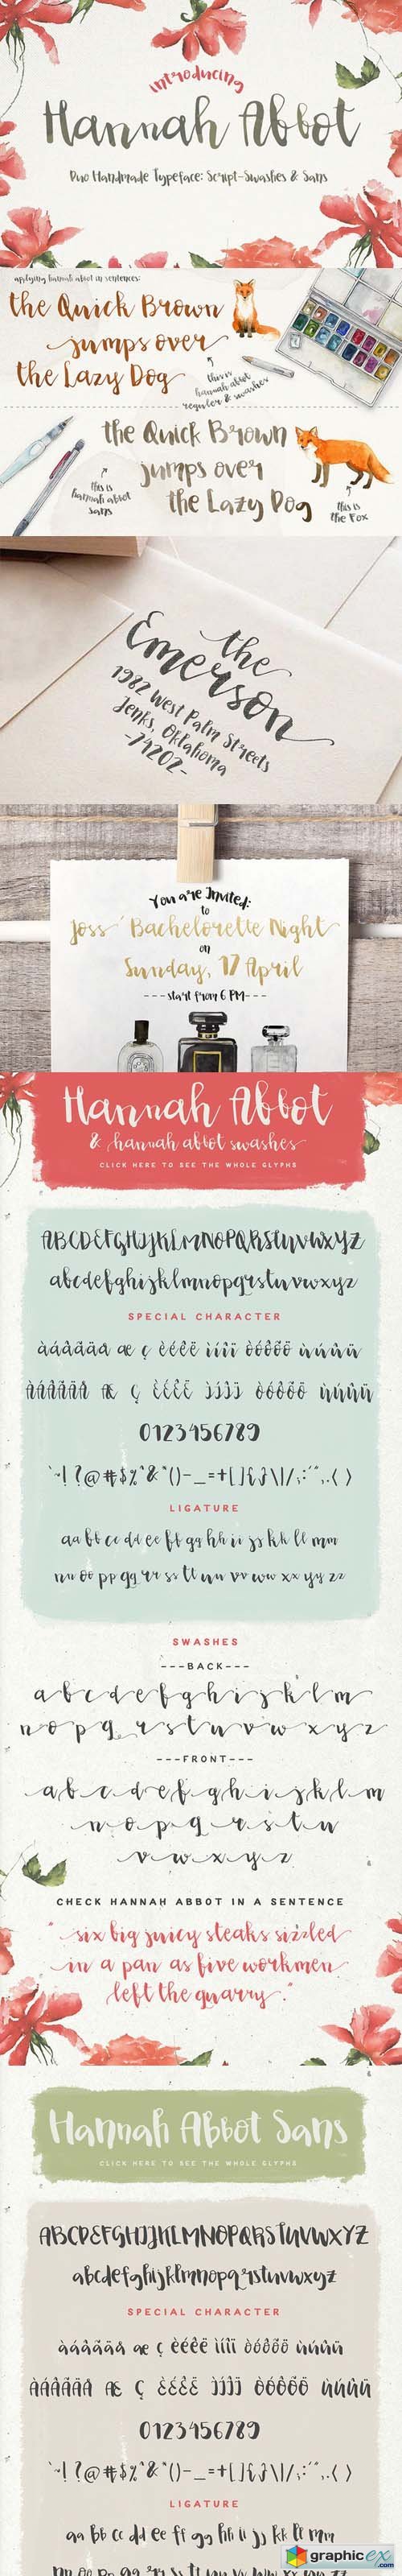 Hannah Abbot font